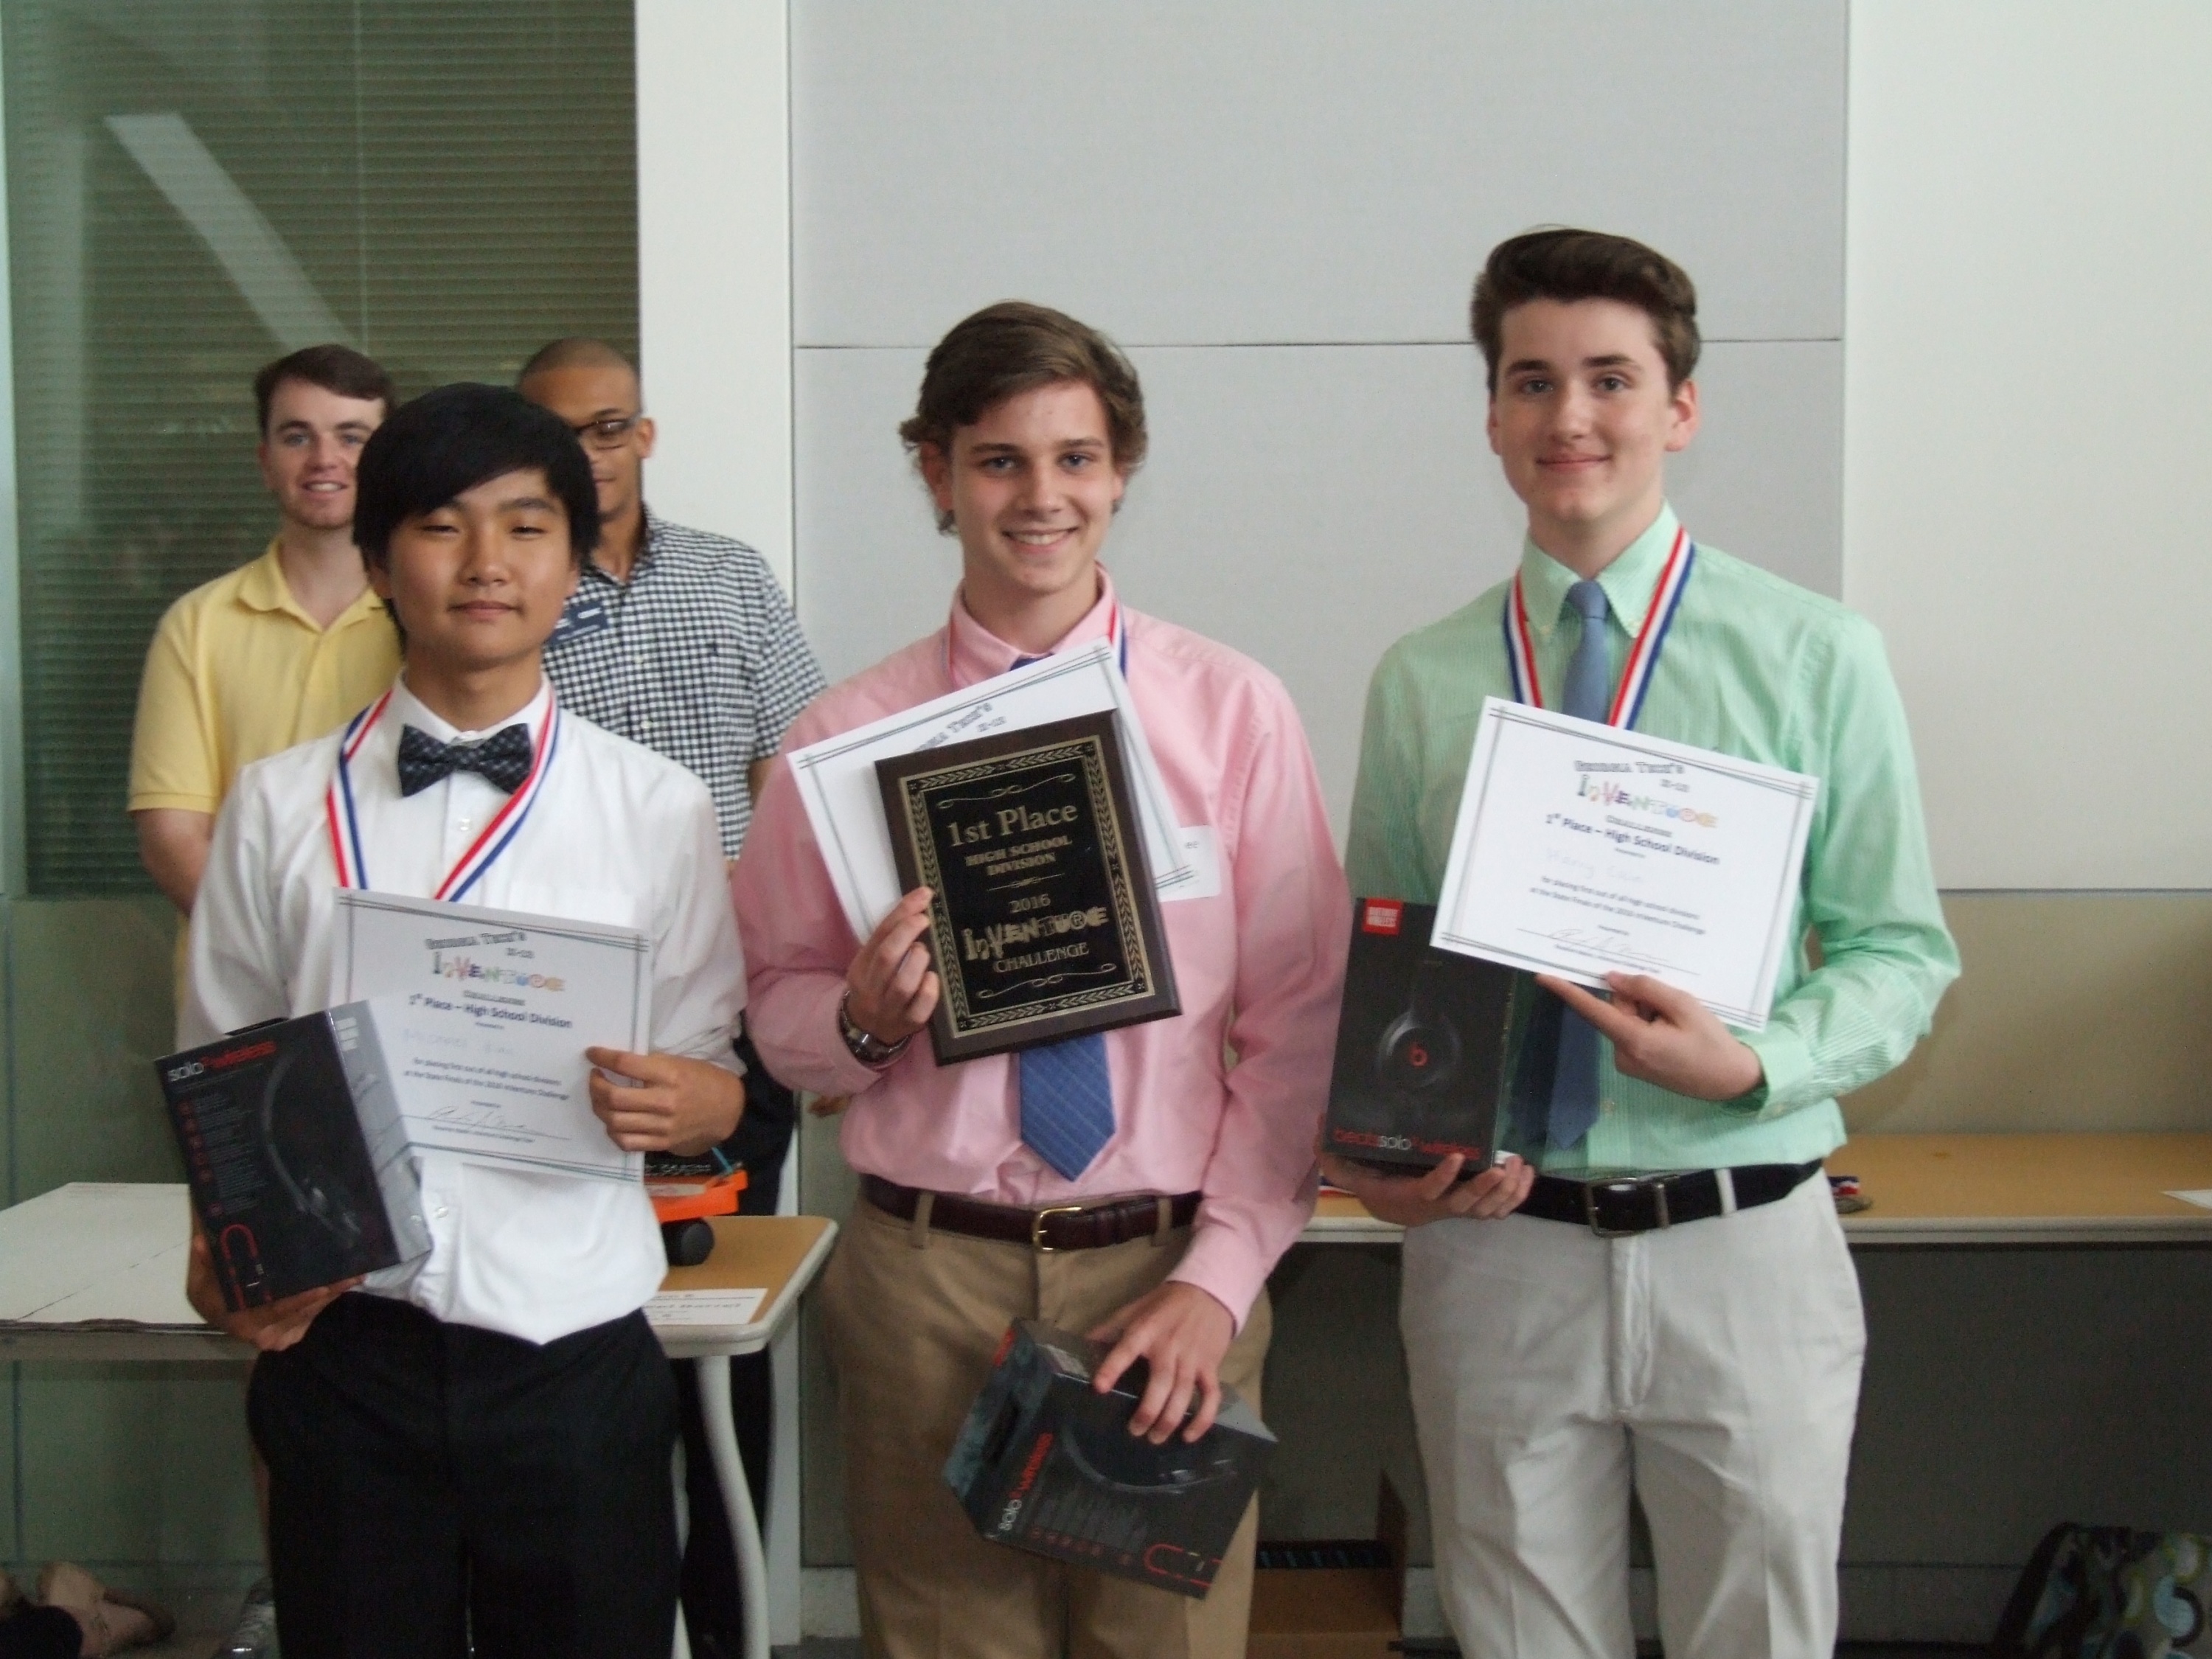 1st Place High School Award:Team: Noise X School: Walton High School Students: Michael Kim, Harry Cain, and Jack Bugbee